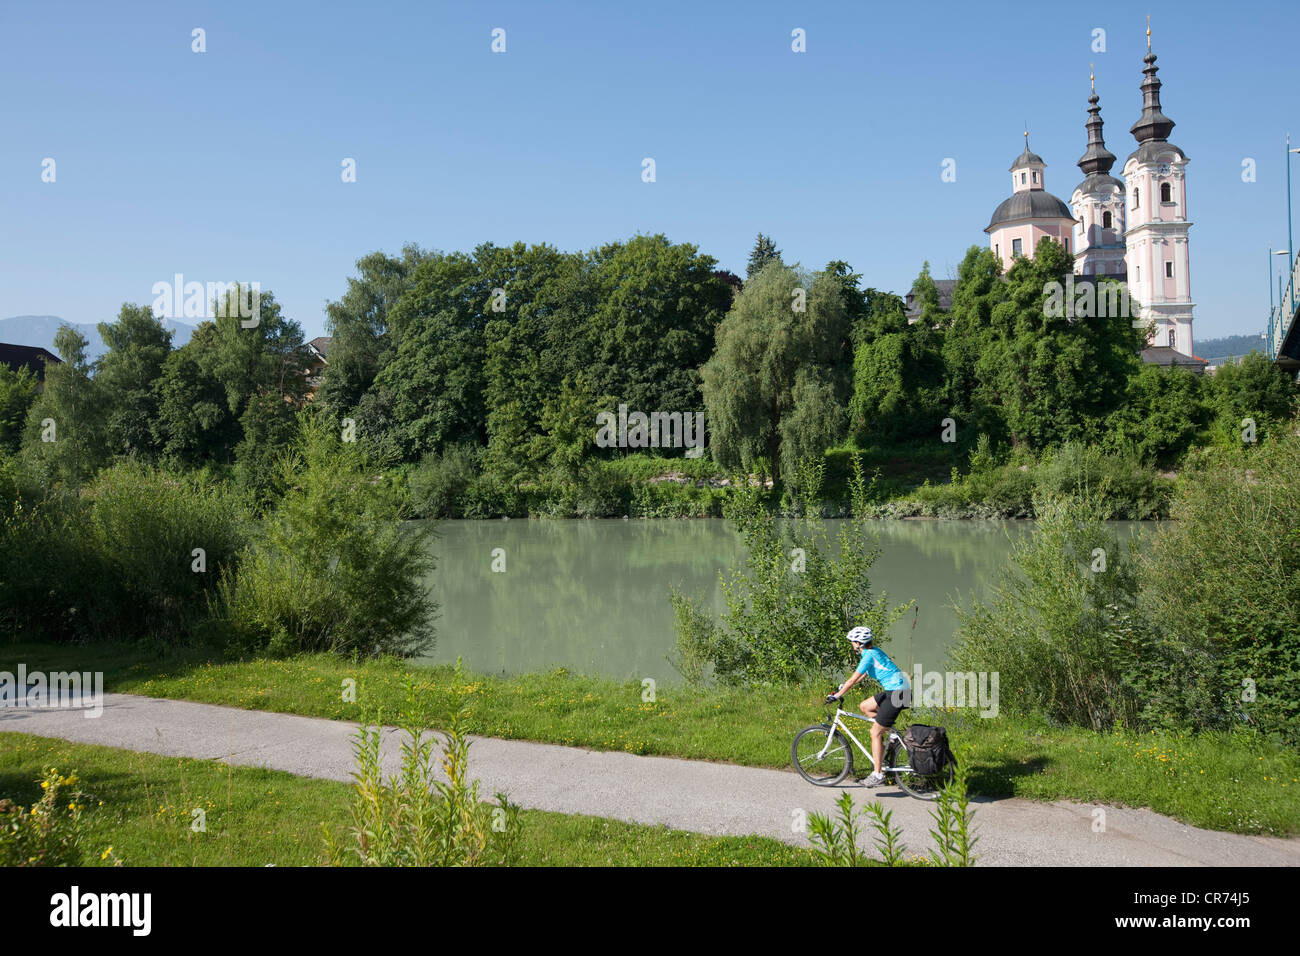 Austria, Carinthia, Villach, Mid adult woman riding bicycle Stock Photo